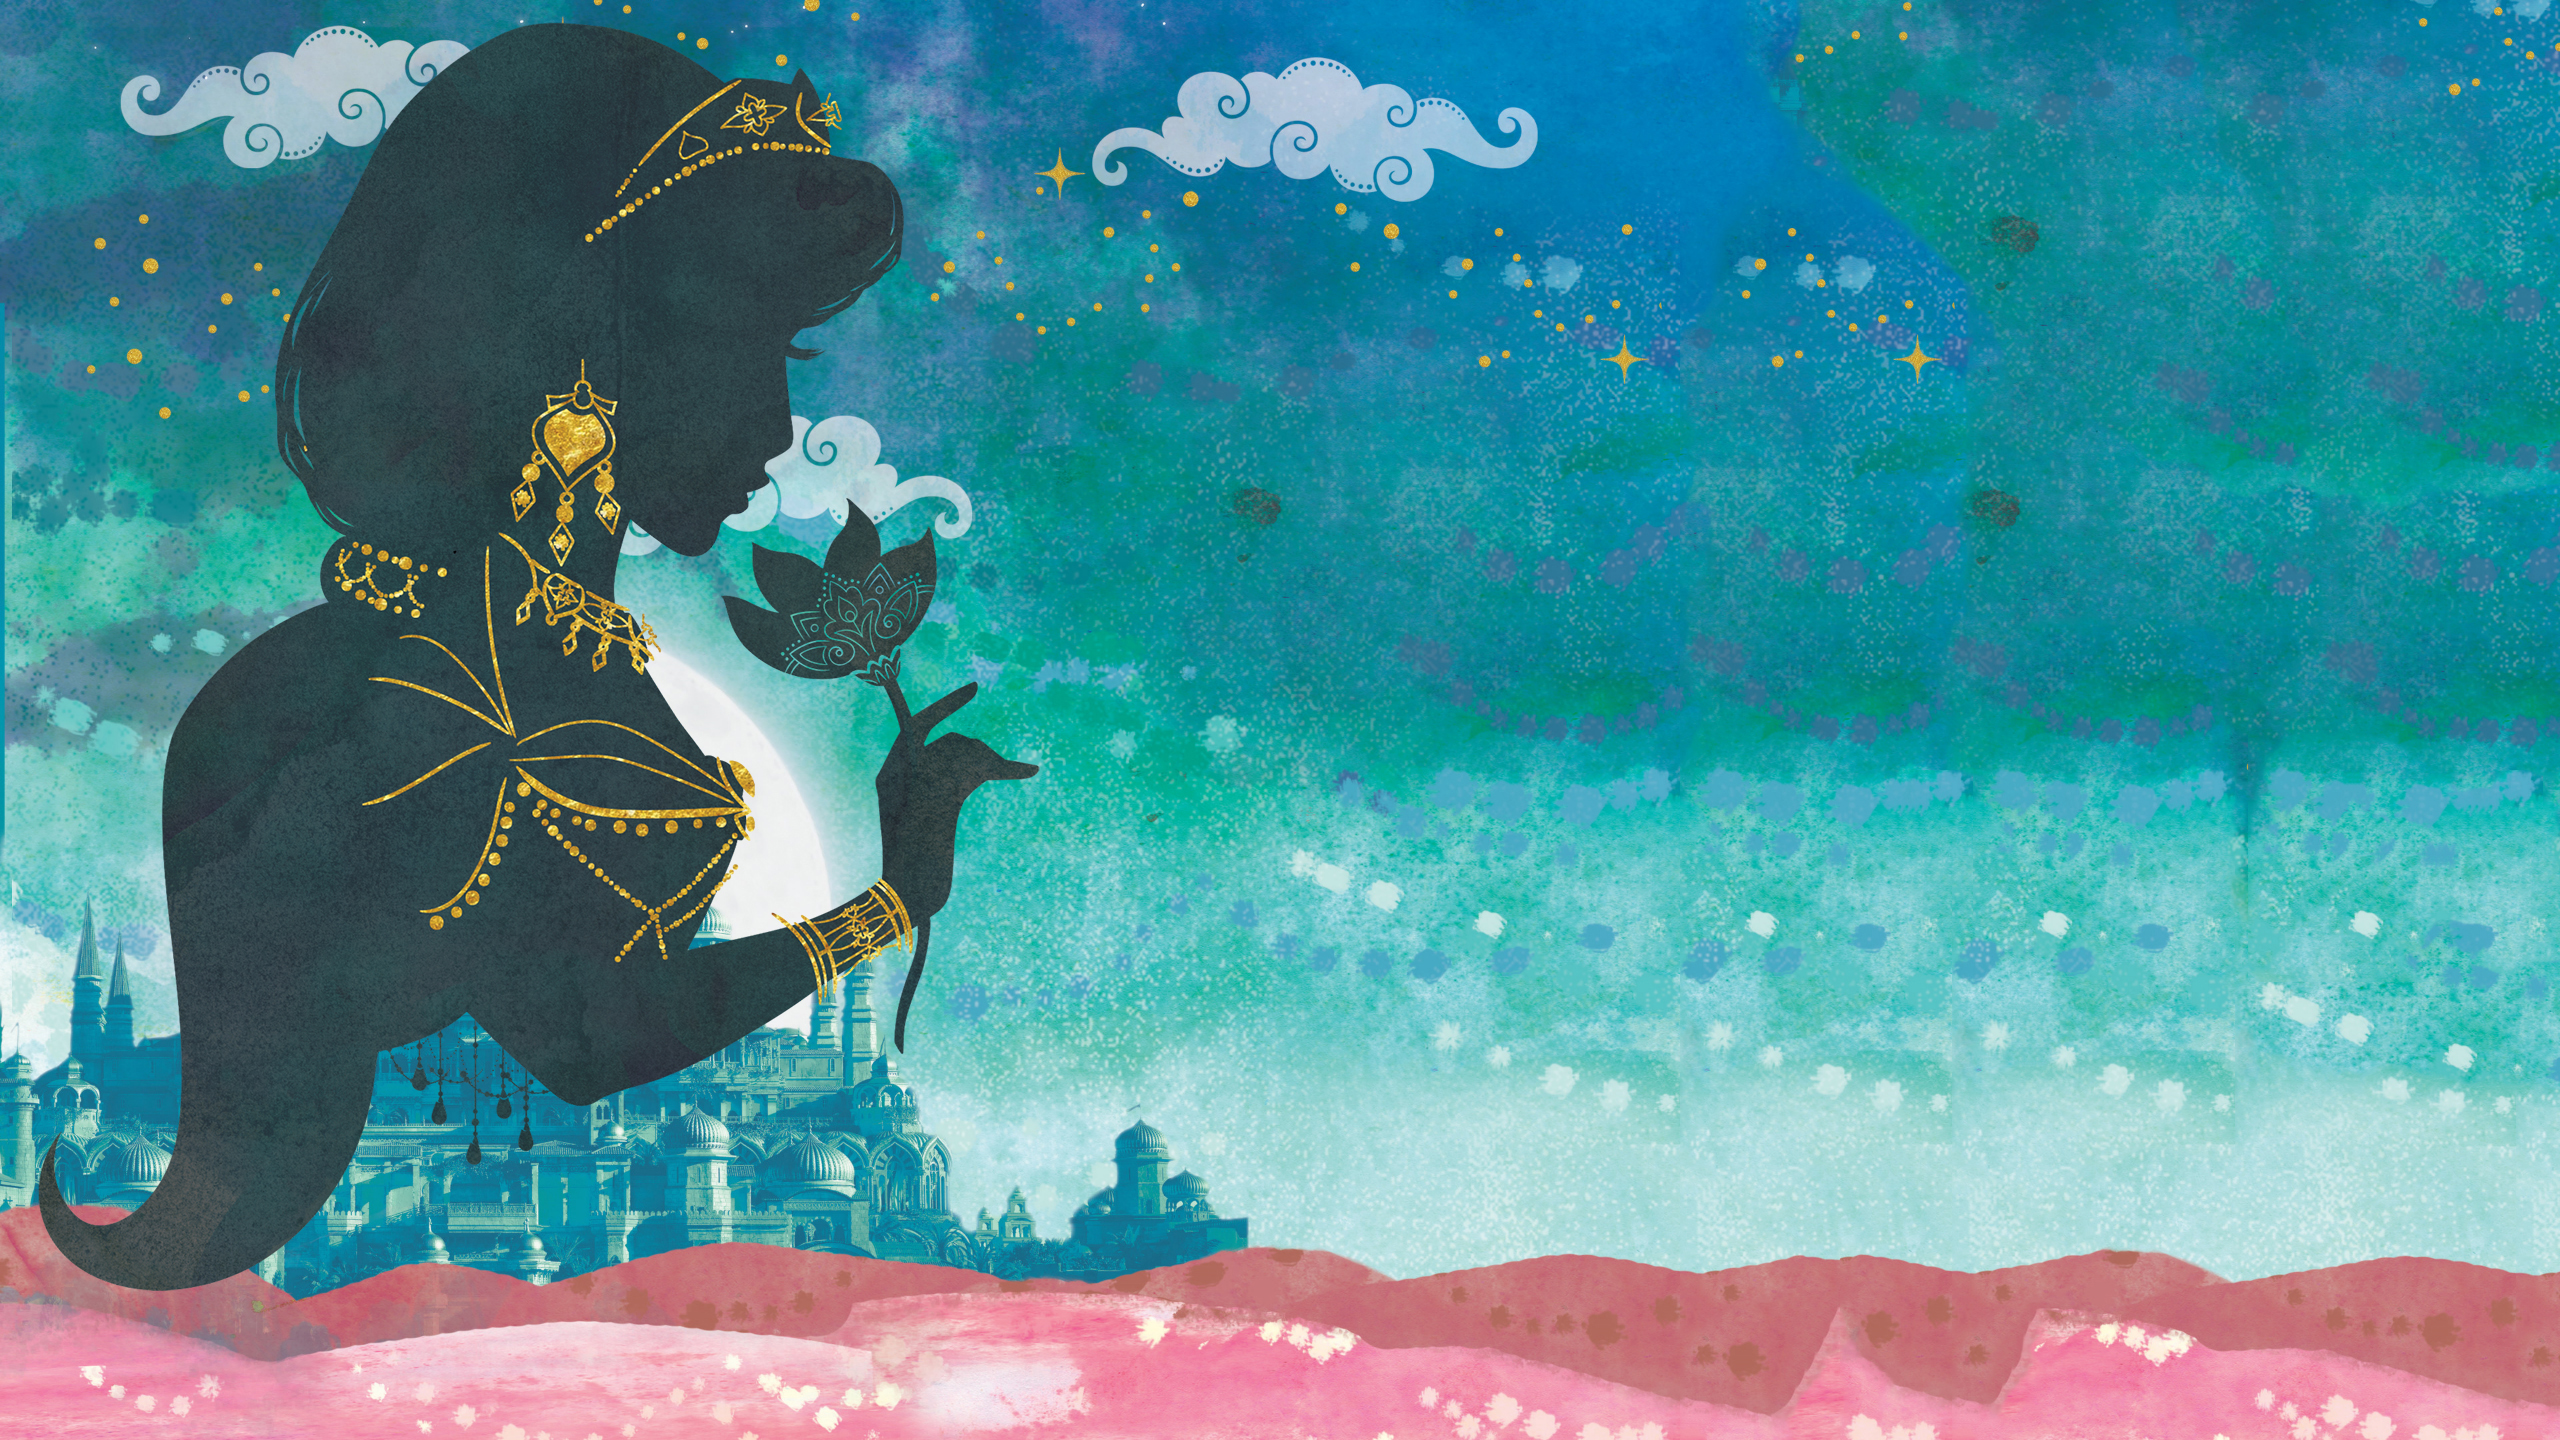 Cartoonish and artistic HD wallpaper of Aladdin 2019 movie